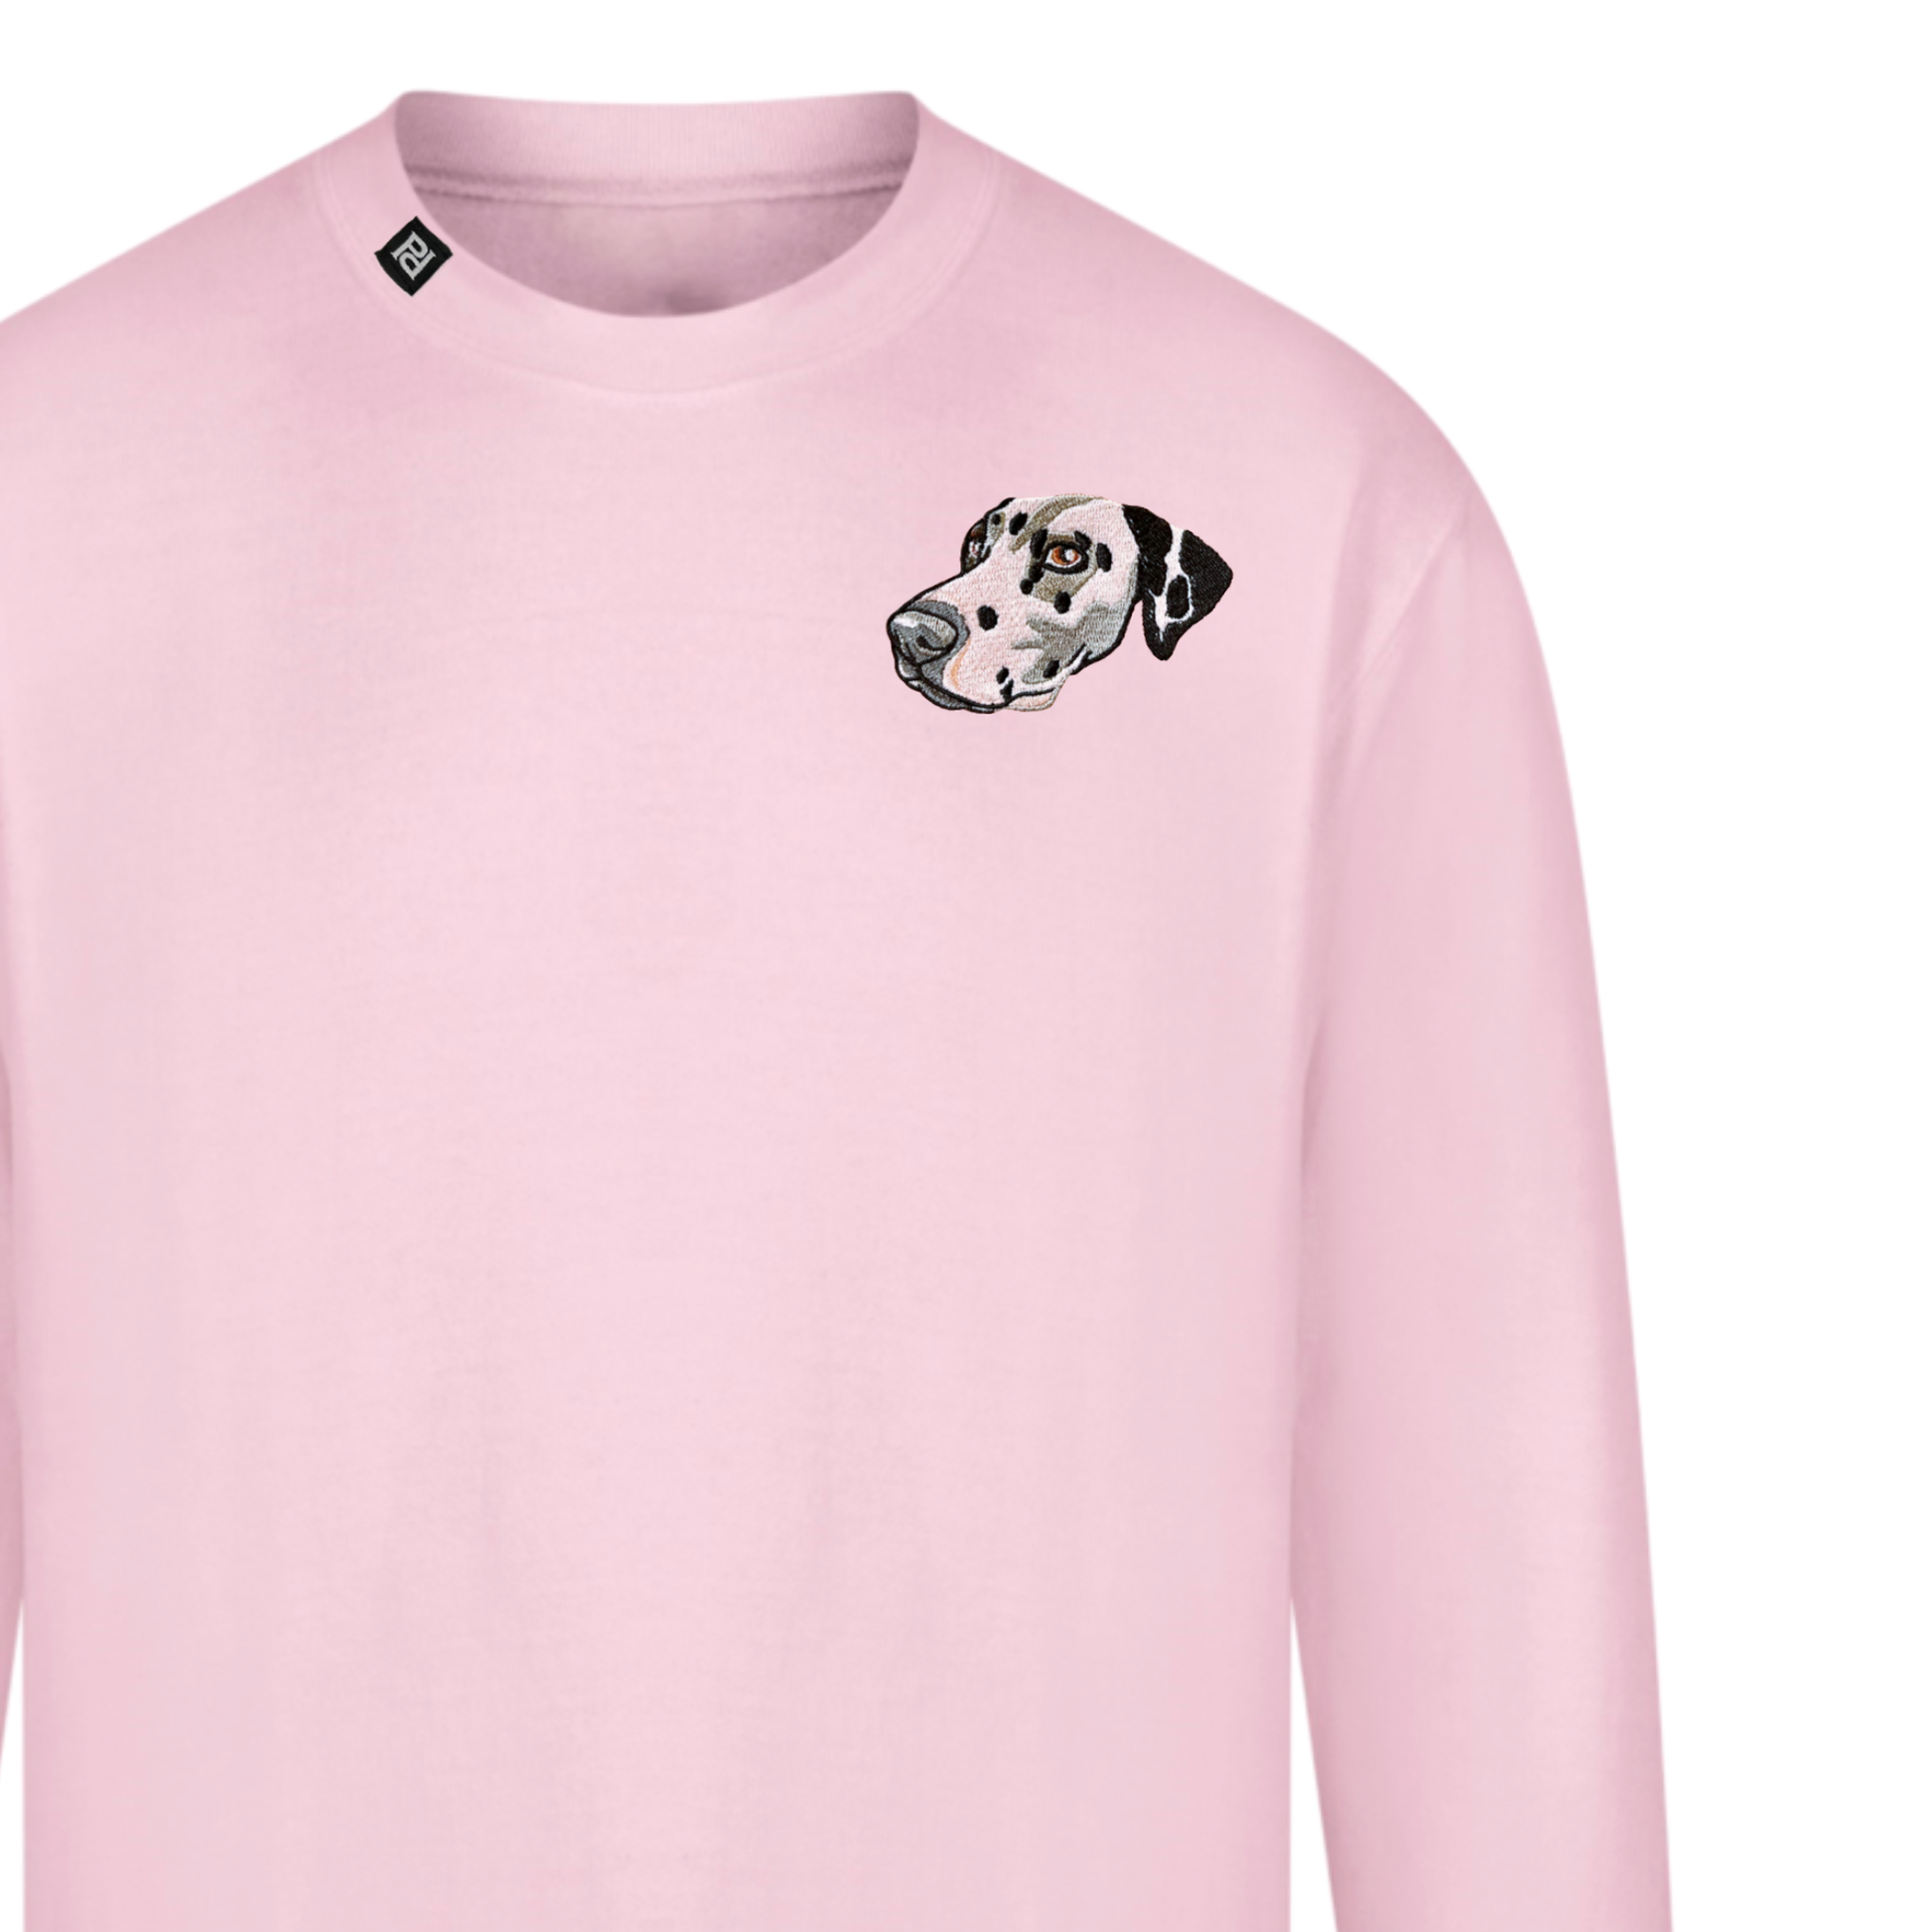 Patch&PopsBoutique Pink / Small / Sweatshirt Pet Portrait: SWEATSHIRT or HOODIE